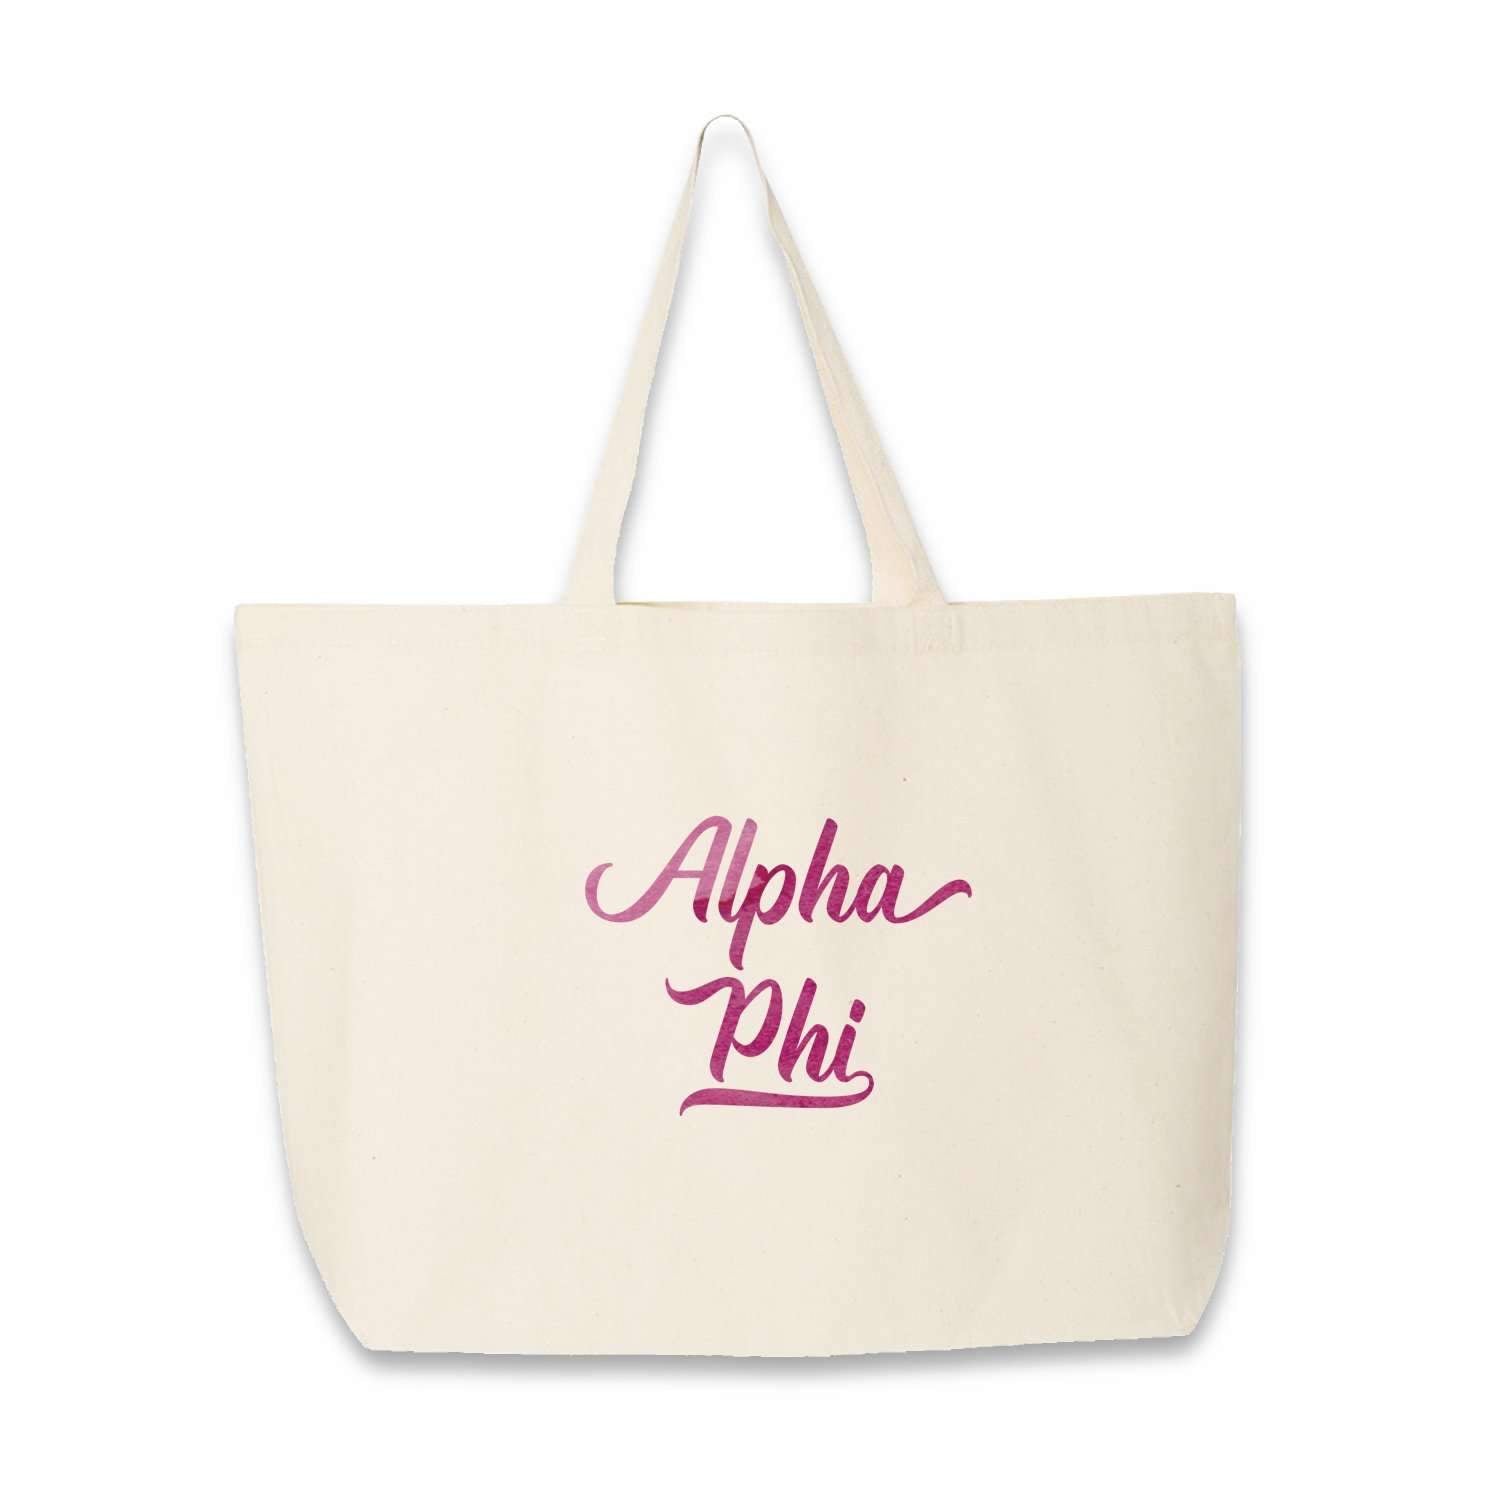 Alpha Phi sorority name custom printed on canvas tote bag